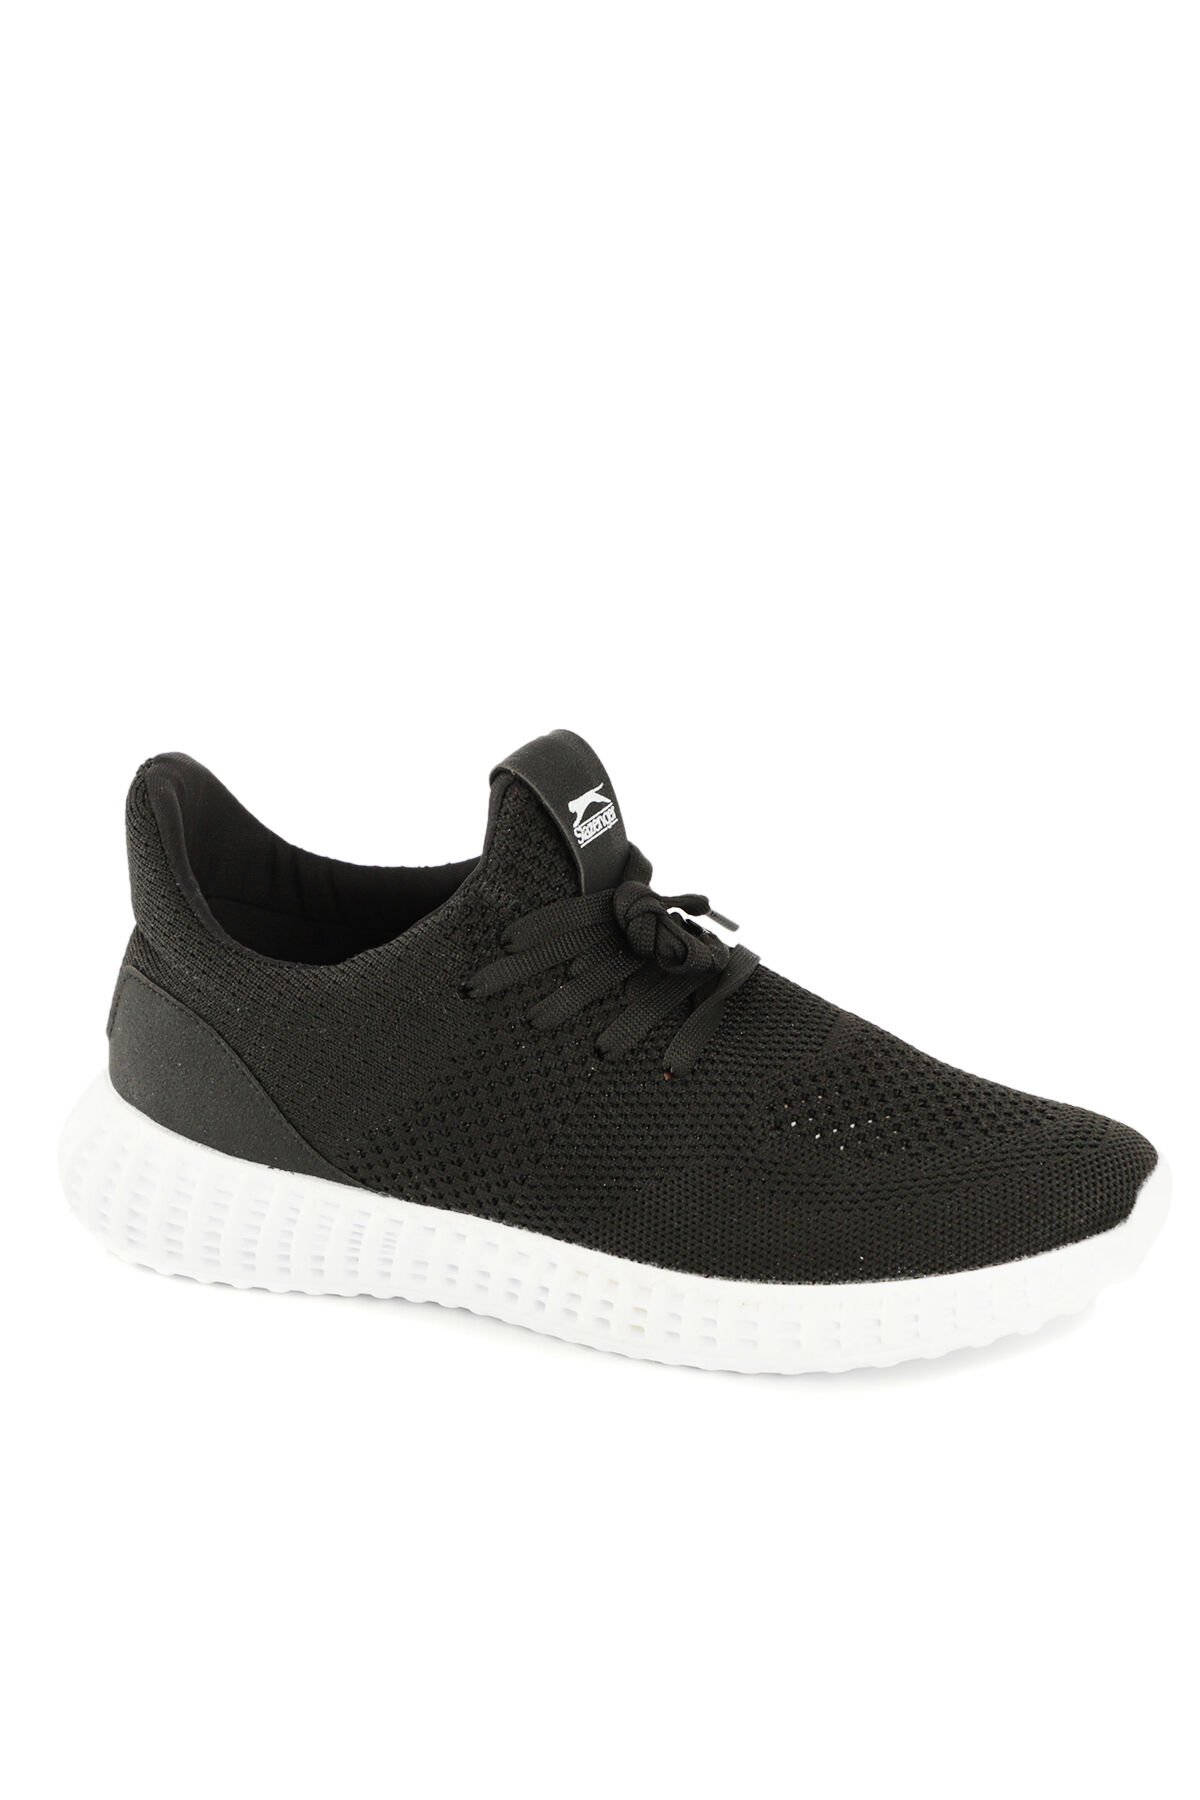 Slazenger ATOMIC Sneaker Erkek Ayakkabı Siyah / Beyaz - Thumbnail